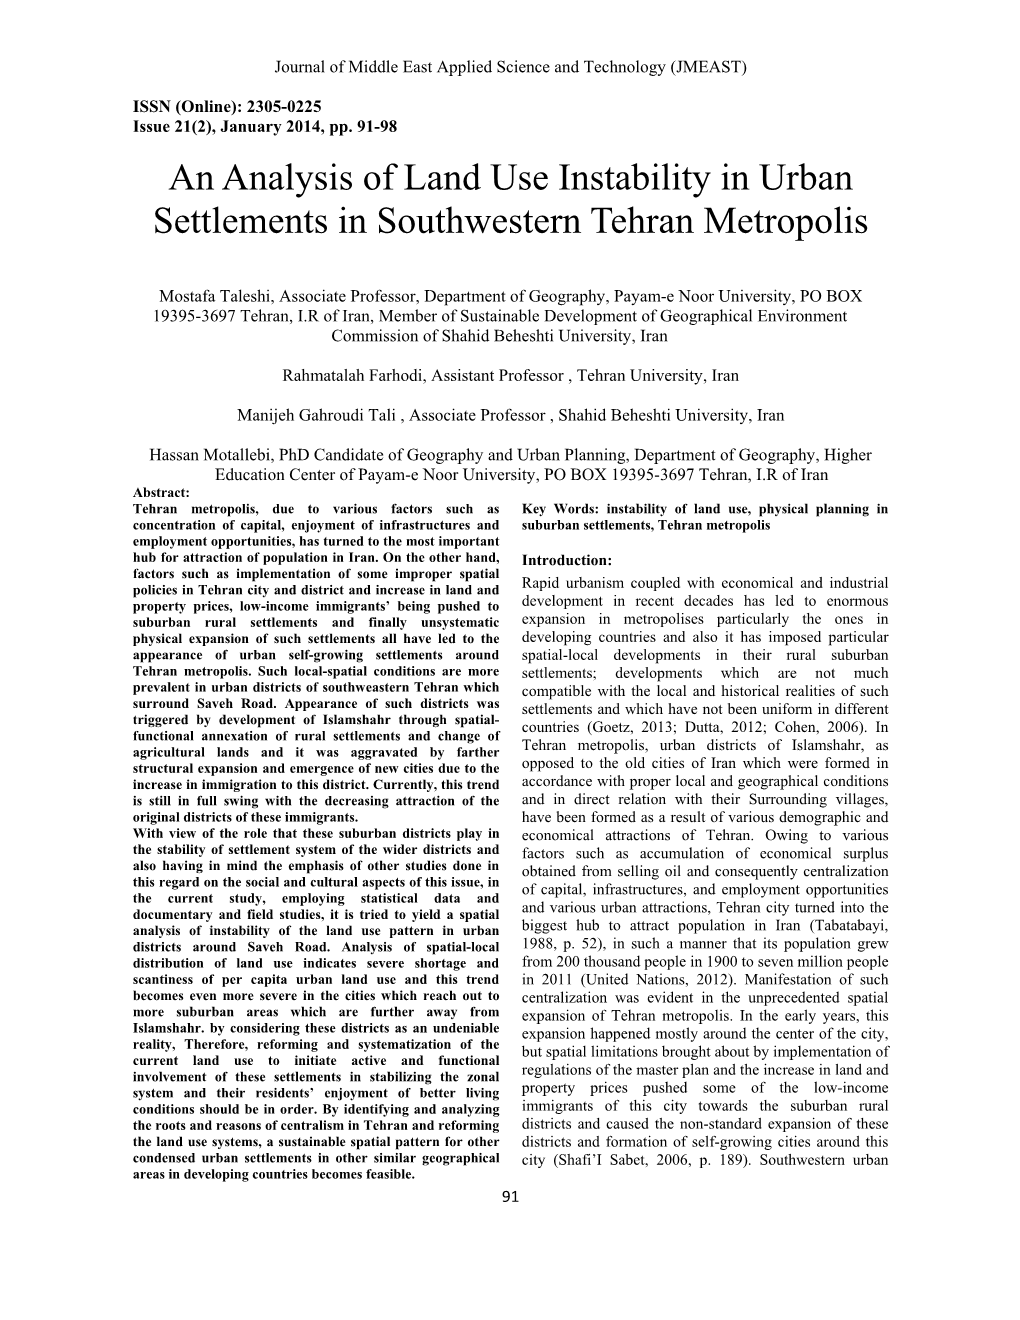 An Analysis of Land Use Instability in Urban Settlements in Southwestern Tehran Metropolis